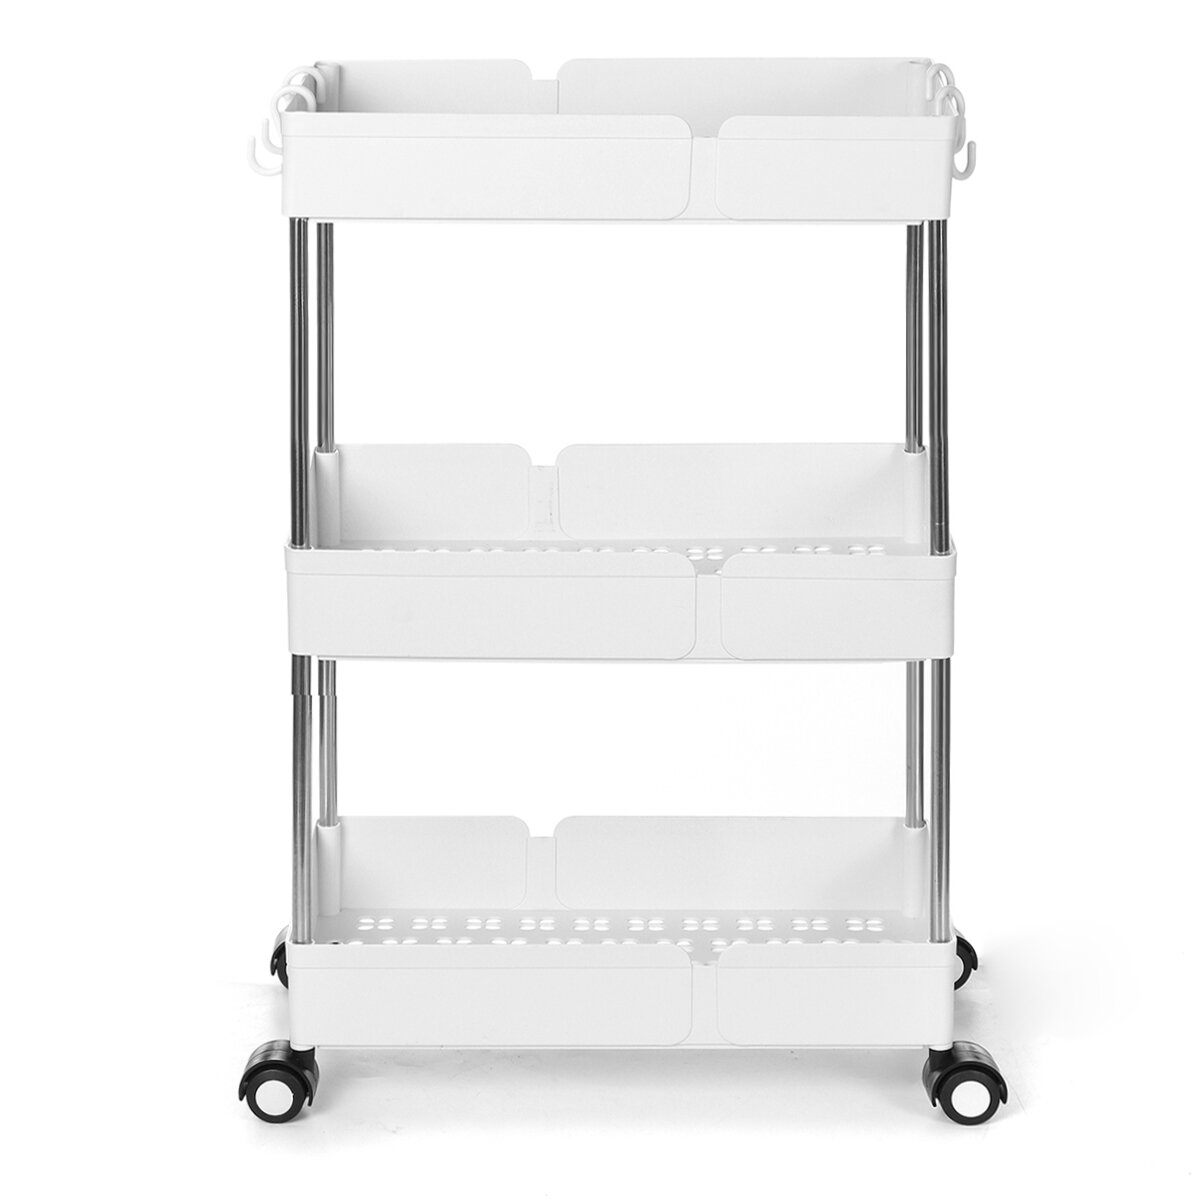 2/3/4 Rolling Trolley Storage Holder Rack Organiser With Wheels For Kitchen Bathroom Office COD